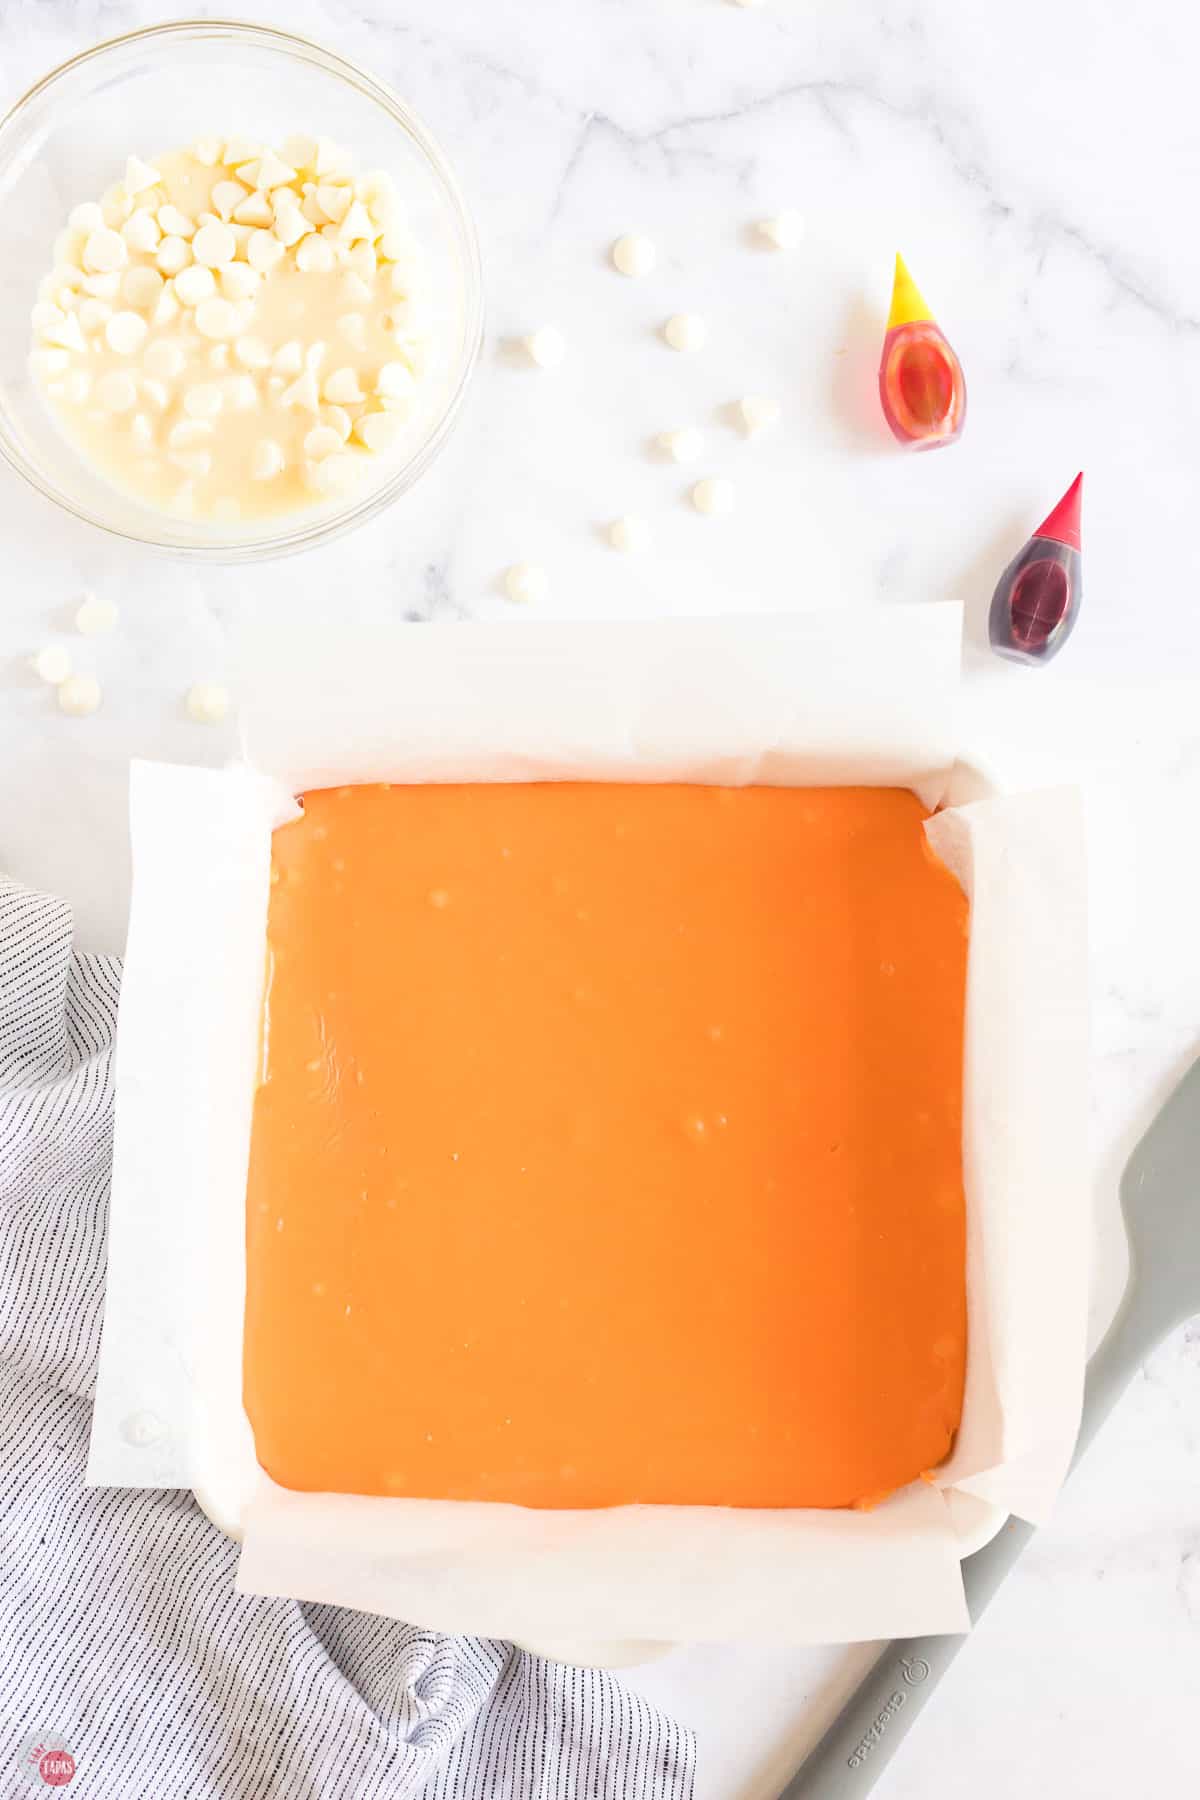 orange fudge in a square pan